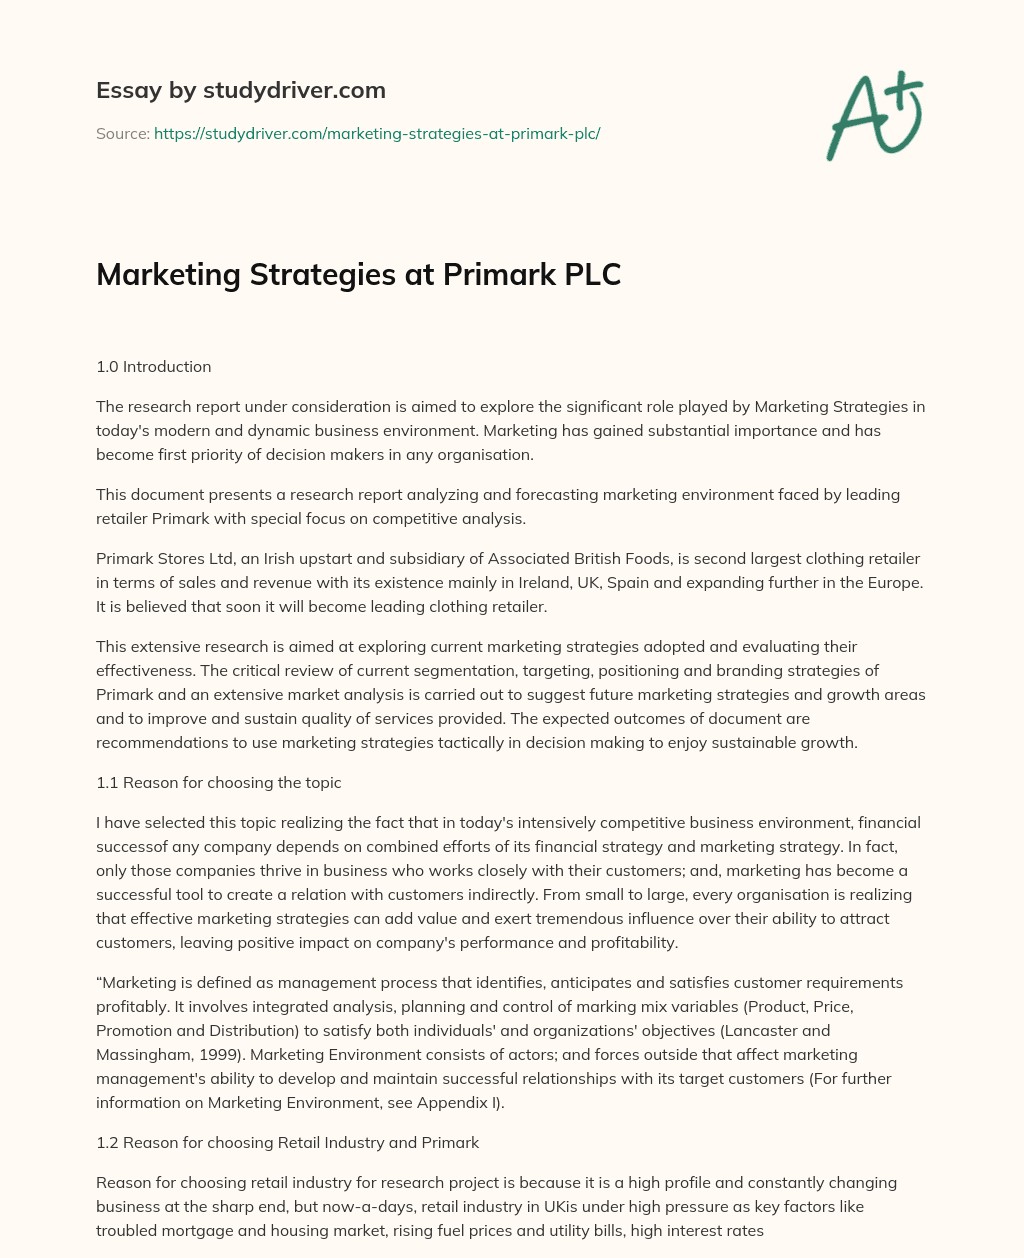 Marketing Strategies at Primark PLC essay